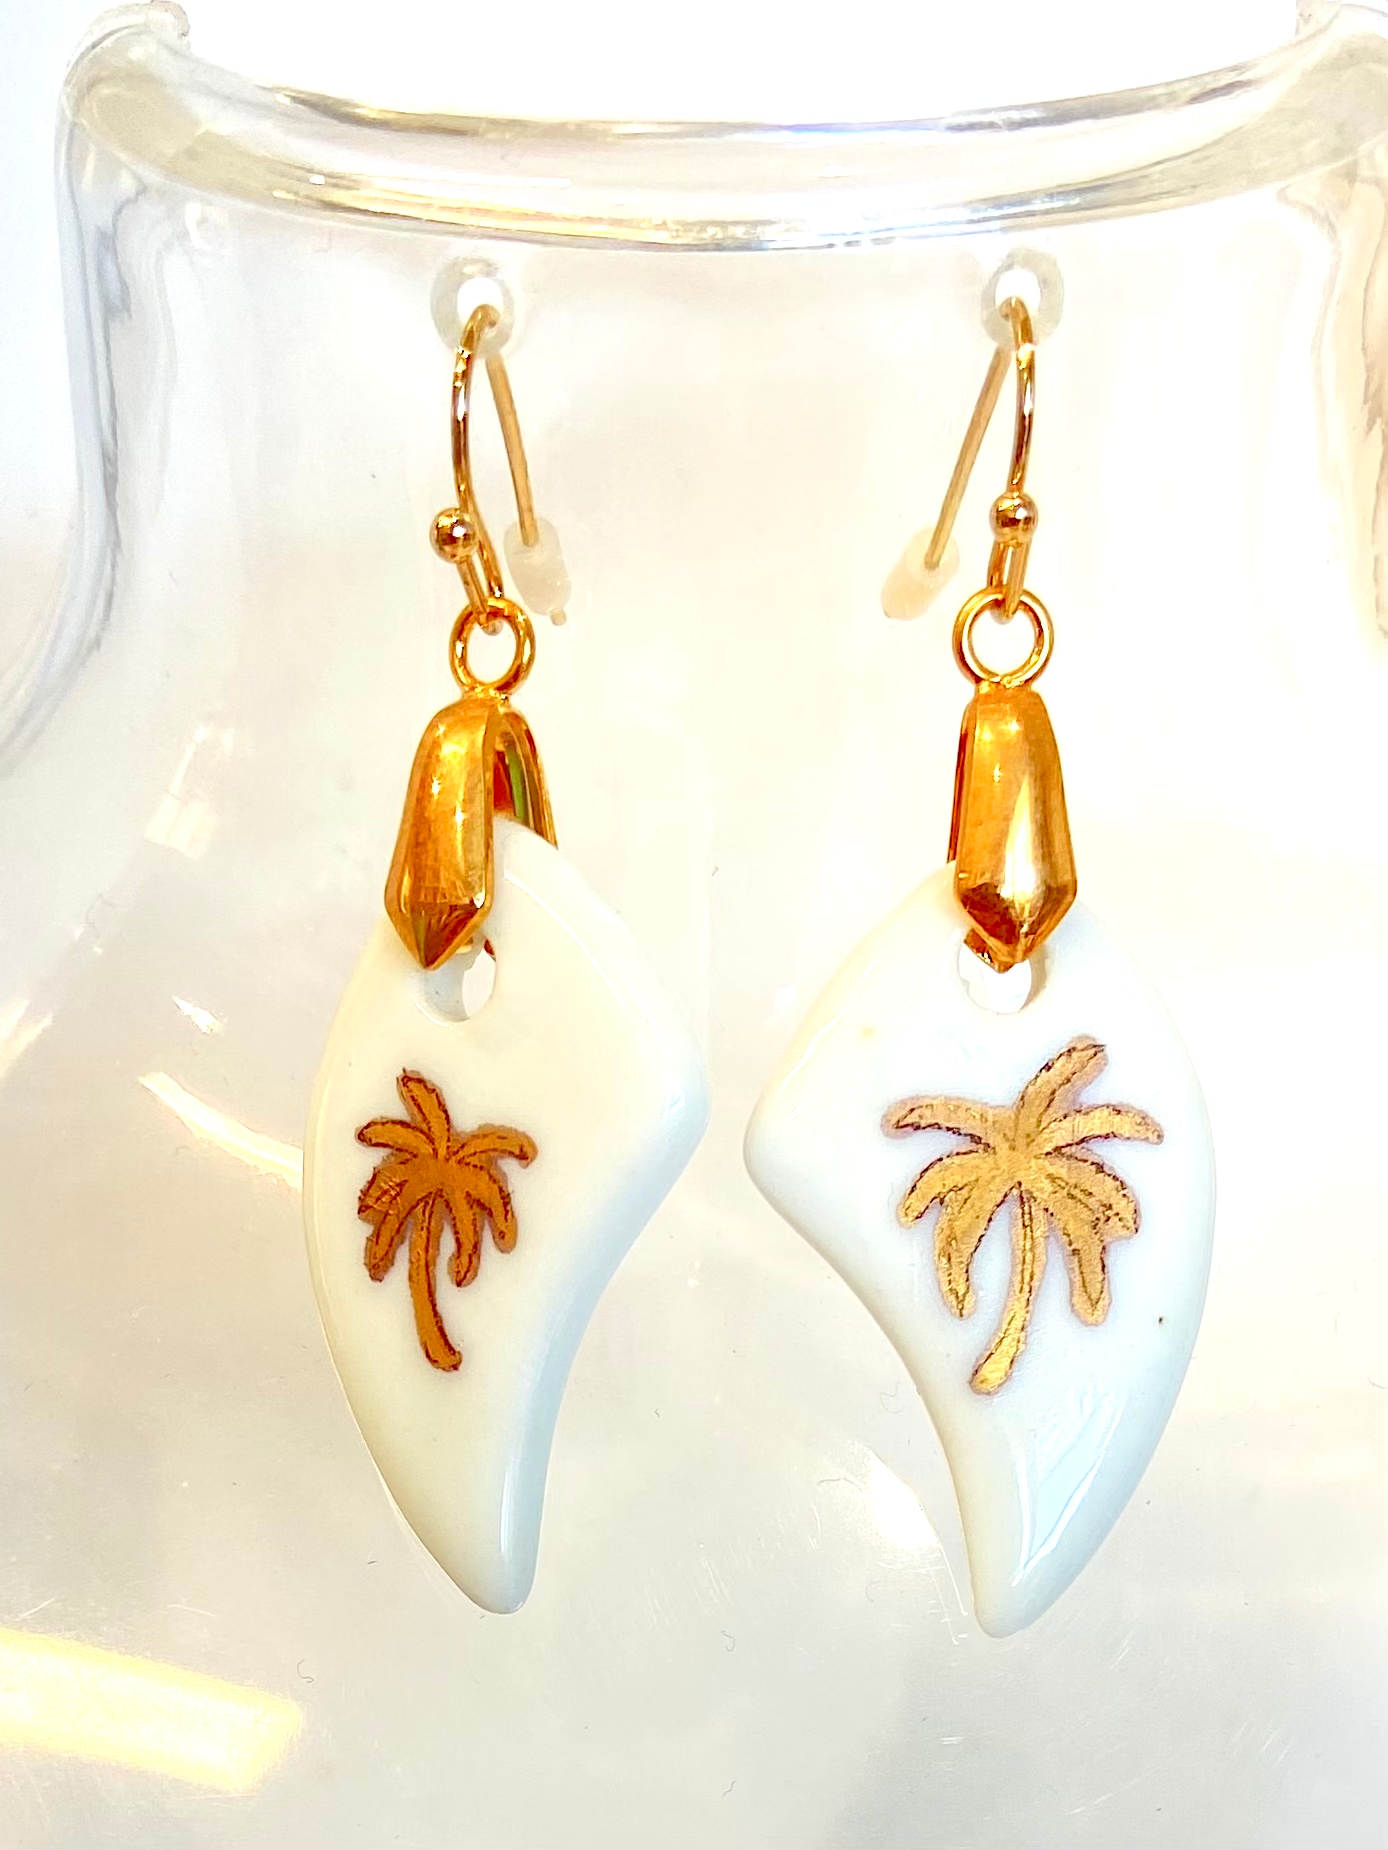 Palm tree earrings Gold Palm Tree Jewelry